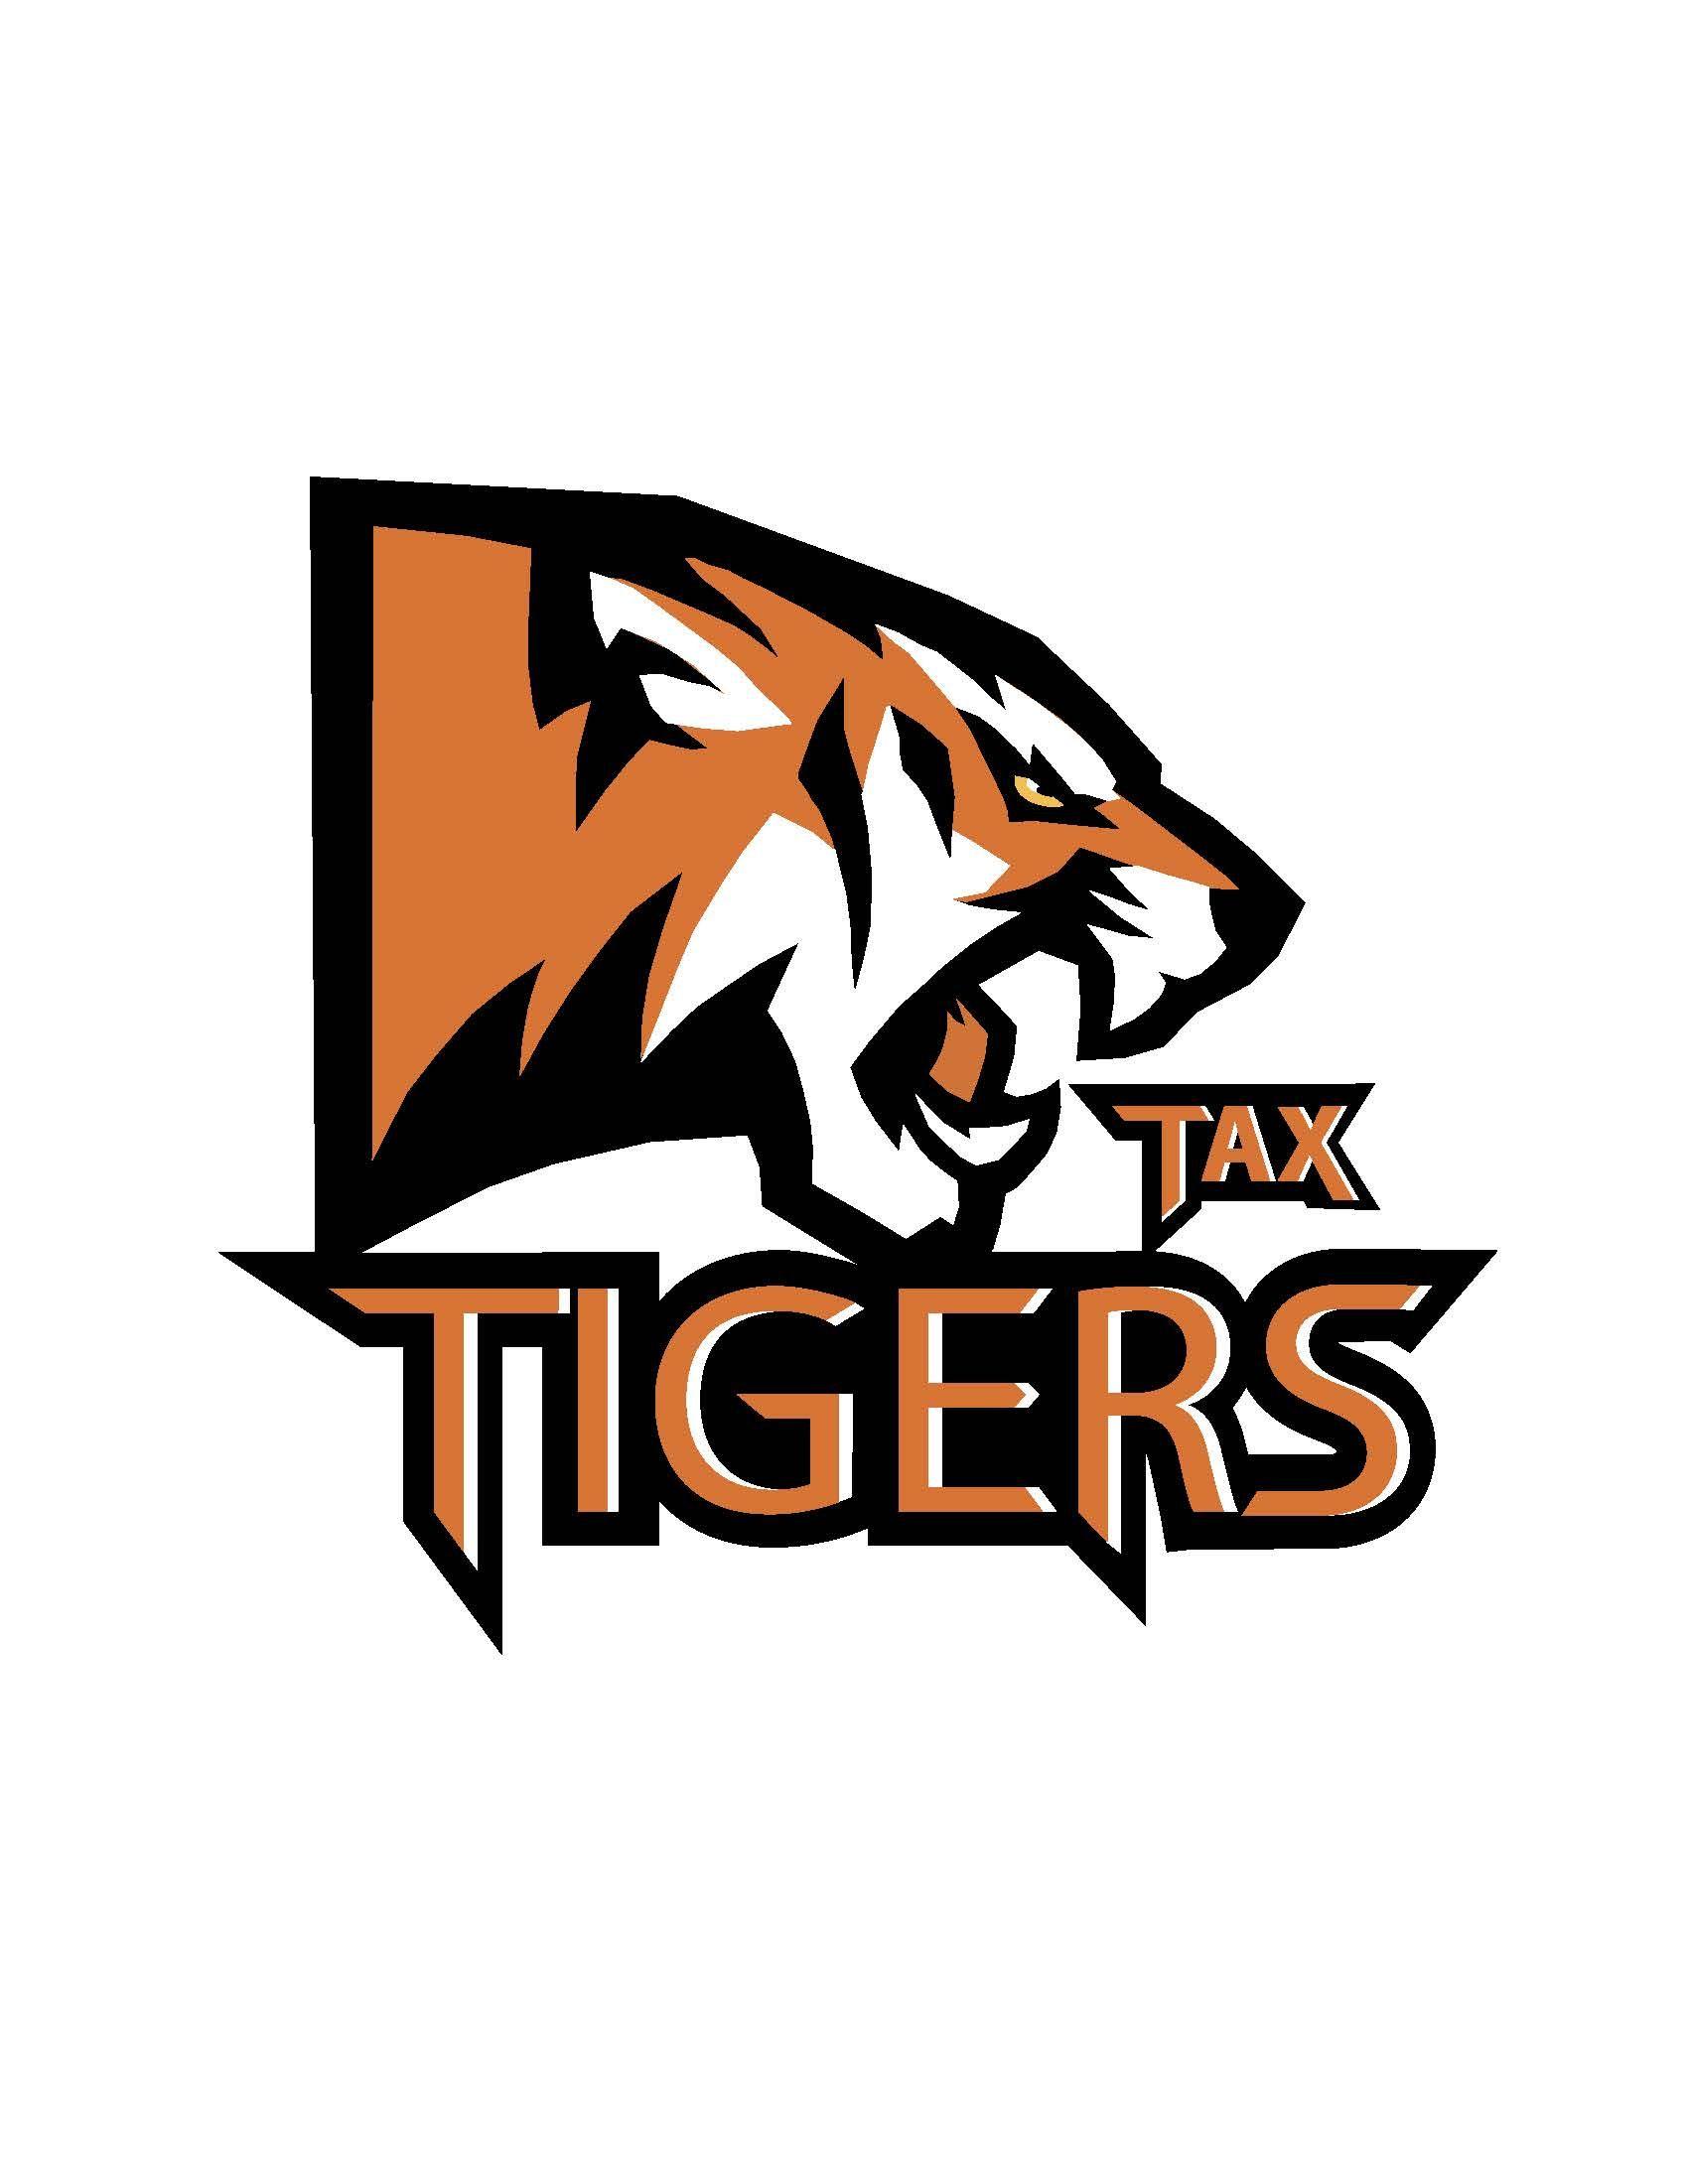 Cricket Team Logo - My Cricket team's Logo - Tax Tigers -Hyderabad | My Logos | Logos ...